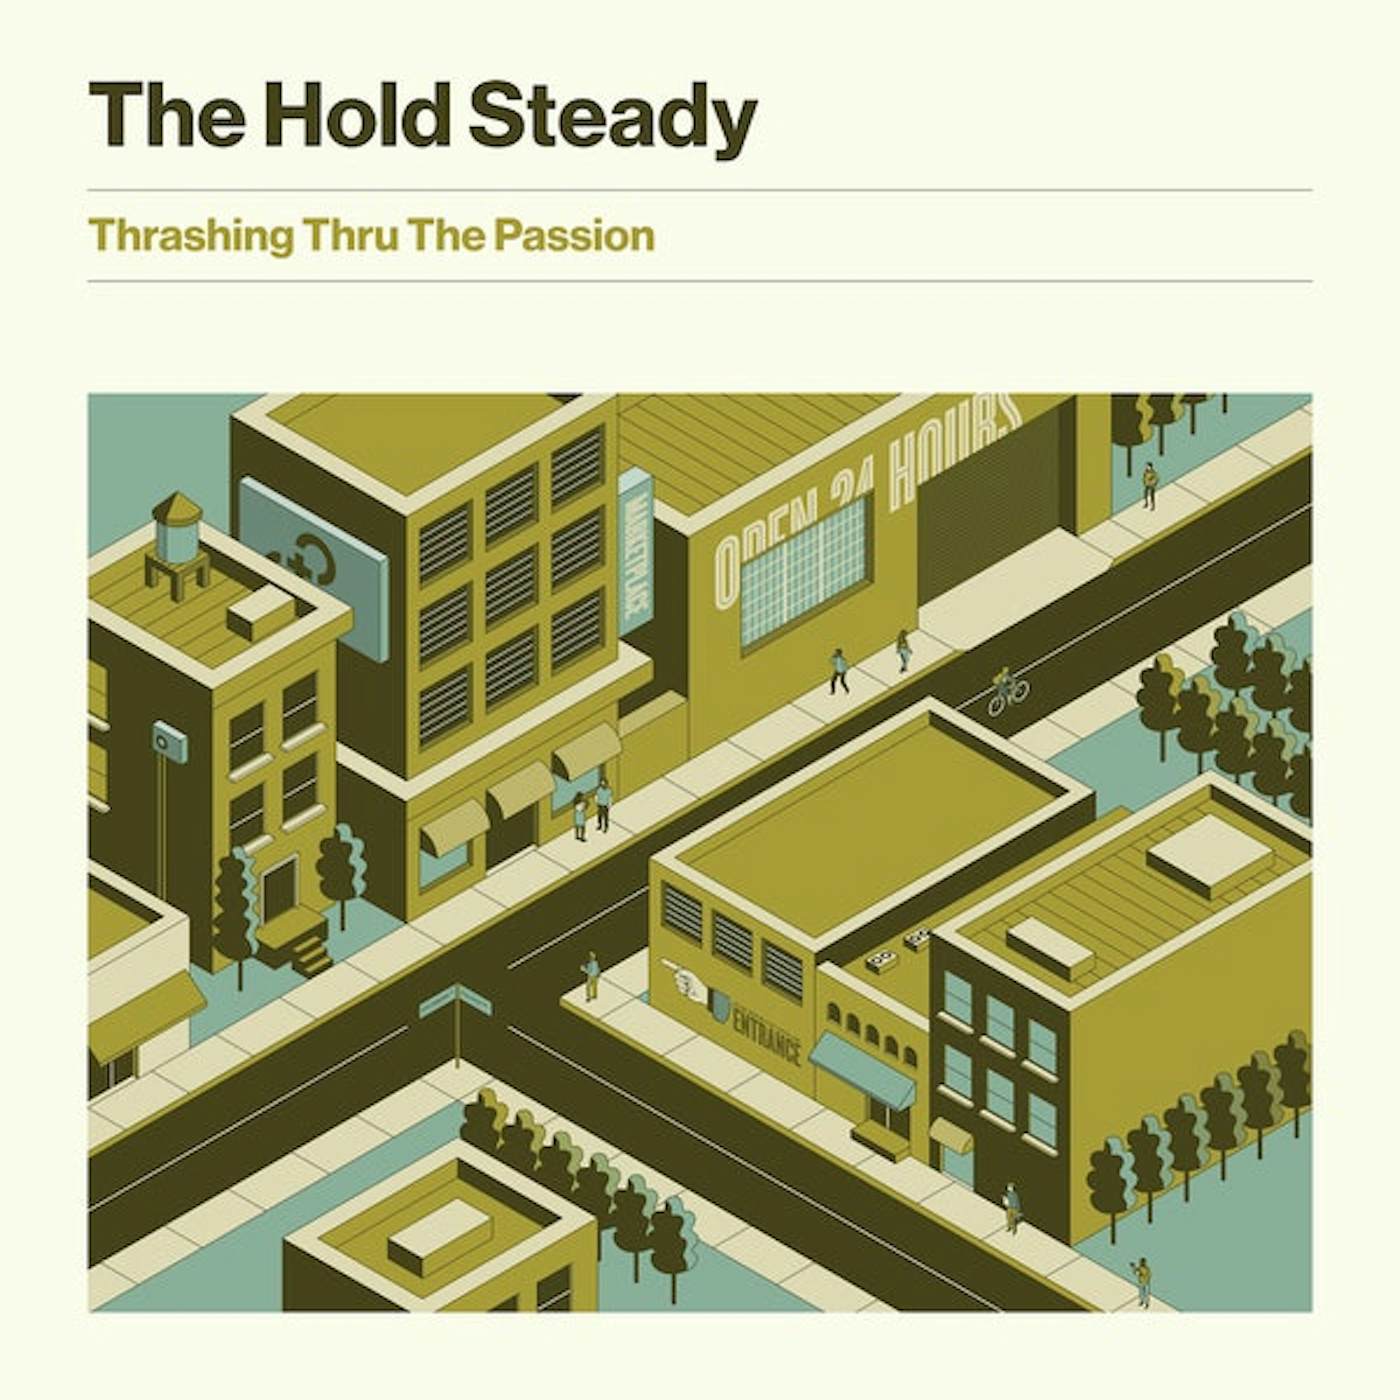 The Hold Steady Thrashing Thru The Passion Vinyl Record